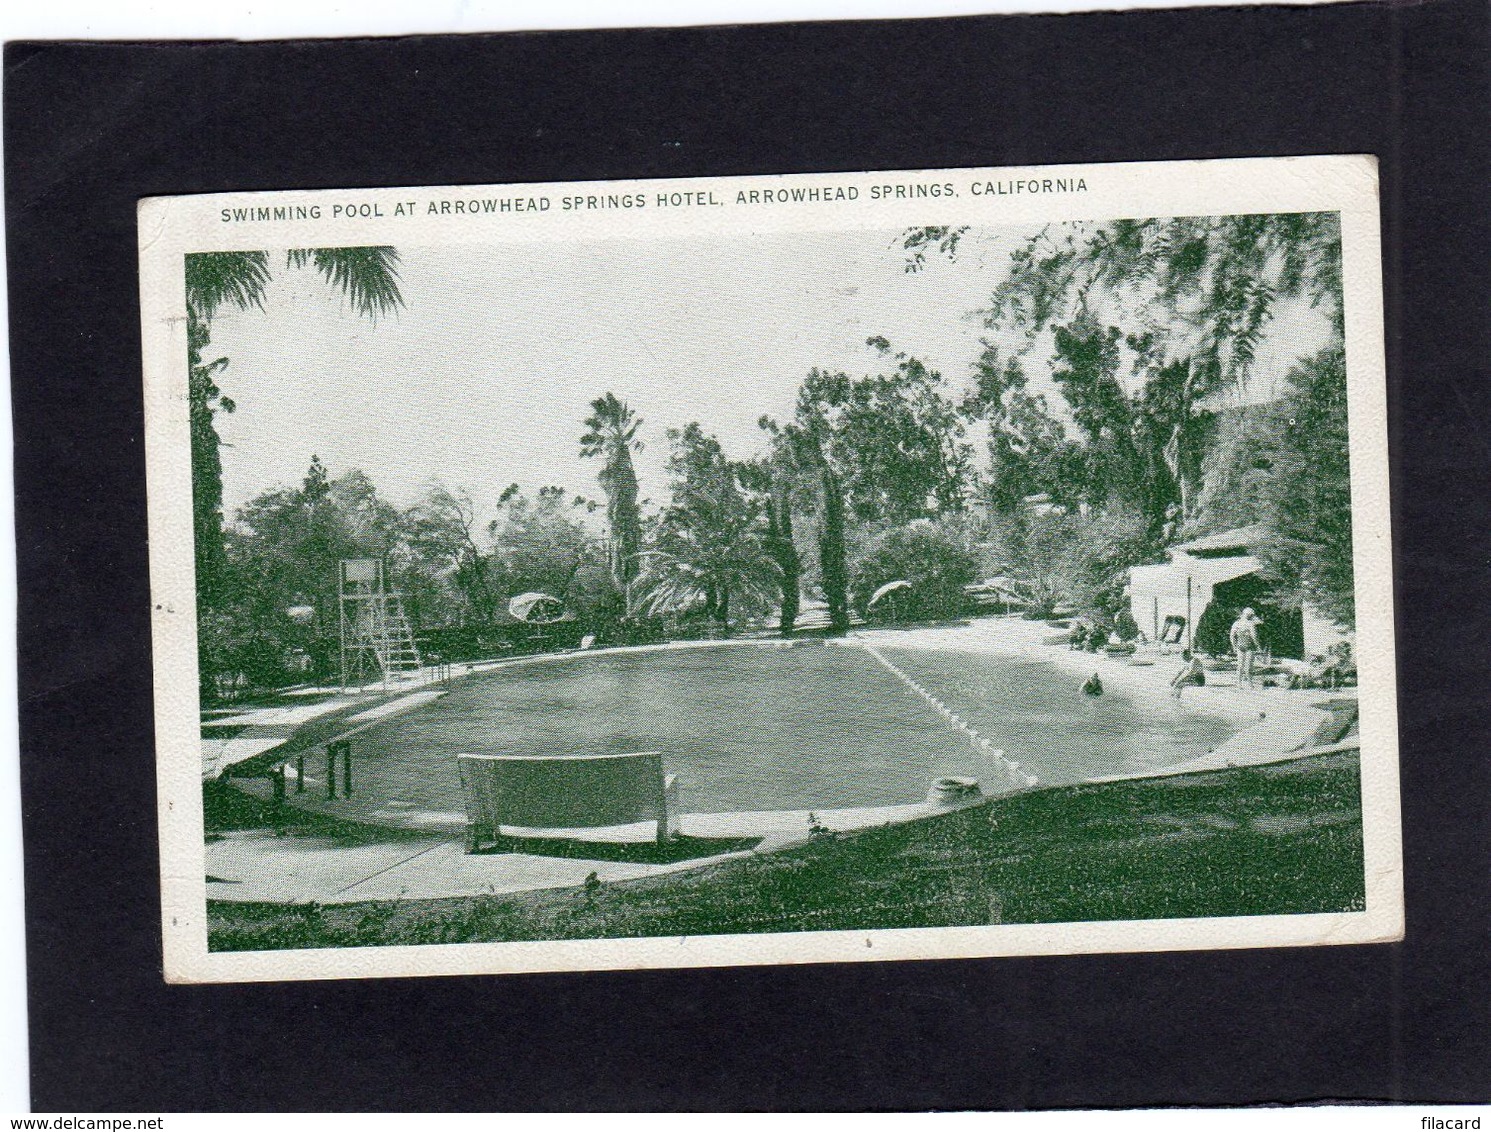 95216    Stati  Uniti,  Swimming  Pool At  Arrowhead Springs  Hotel,  Arrowhead  Springs,  California,  VG  1936 - San Bernardino